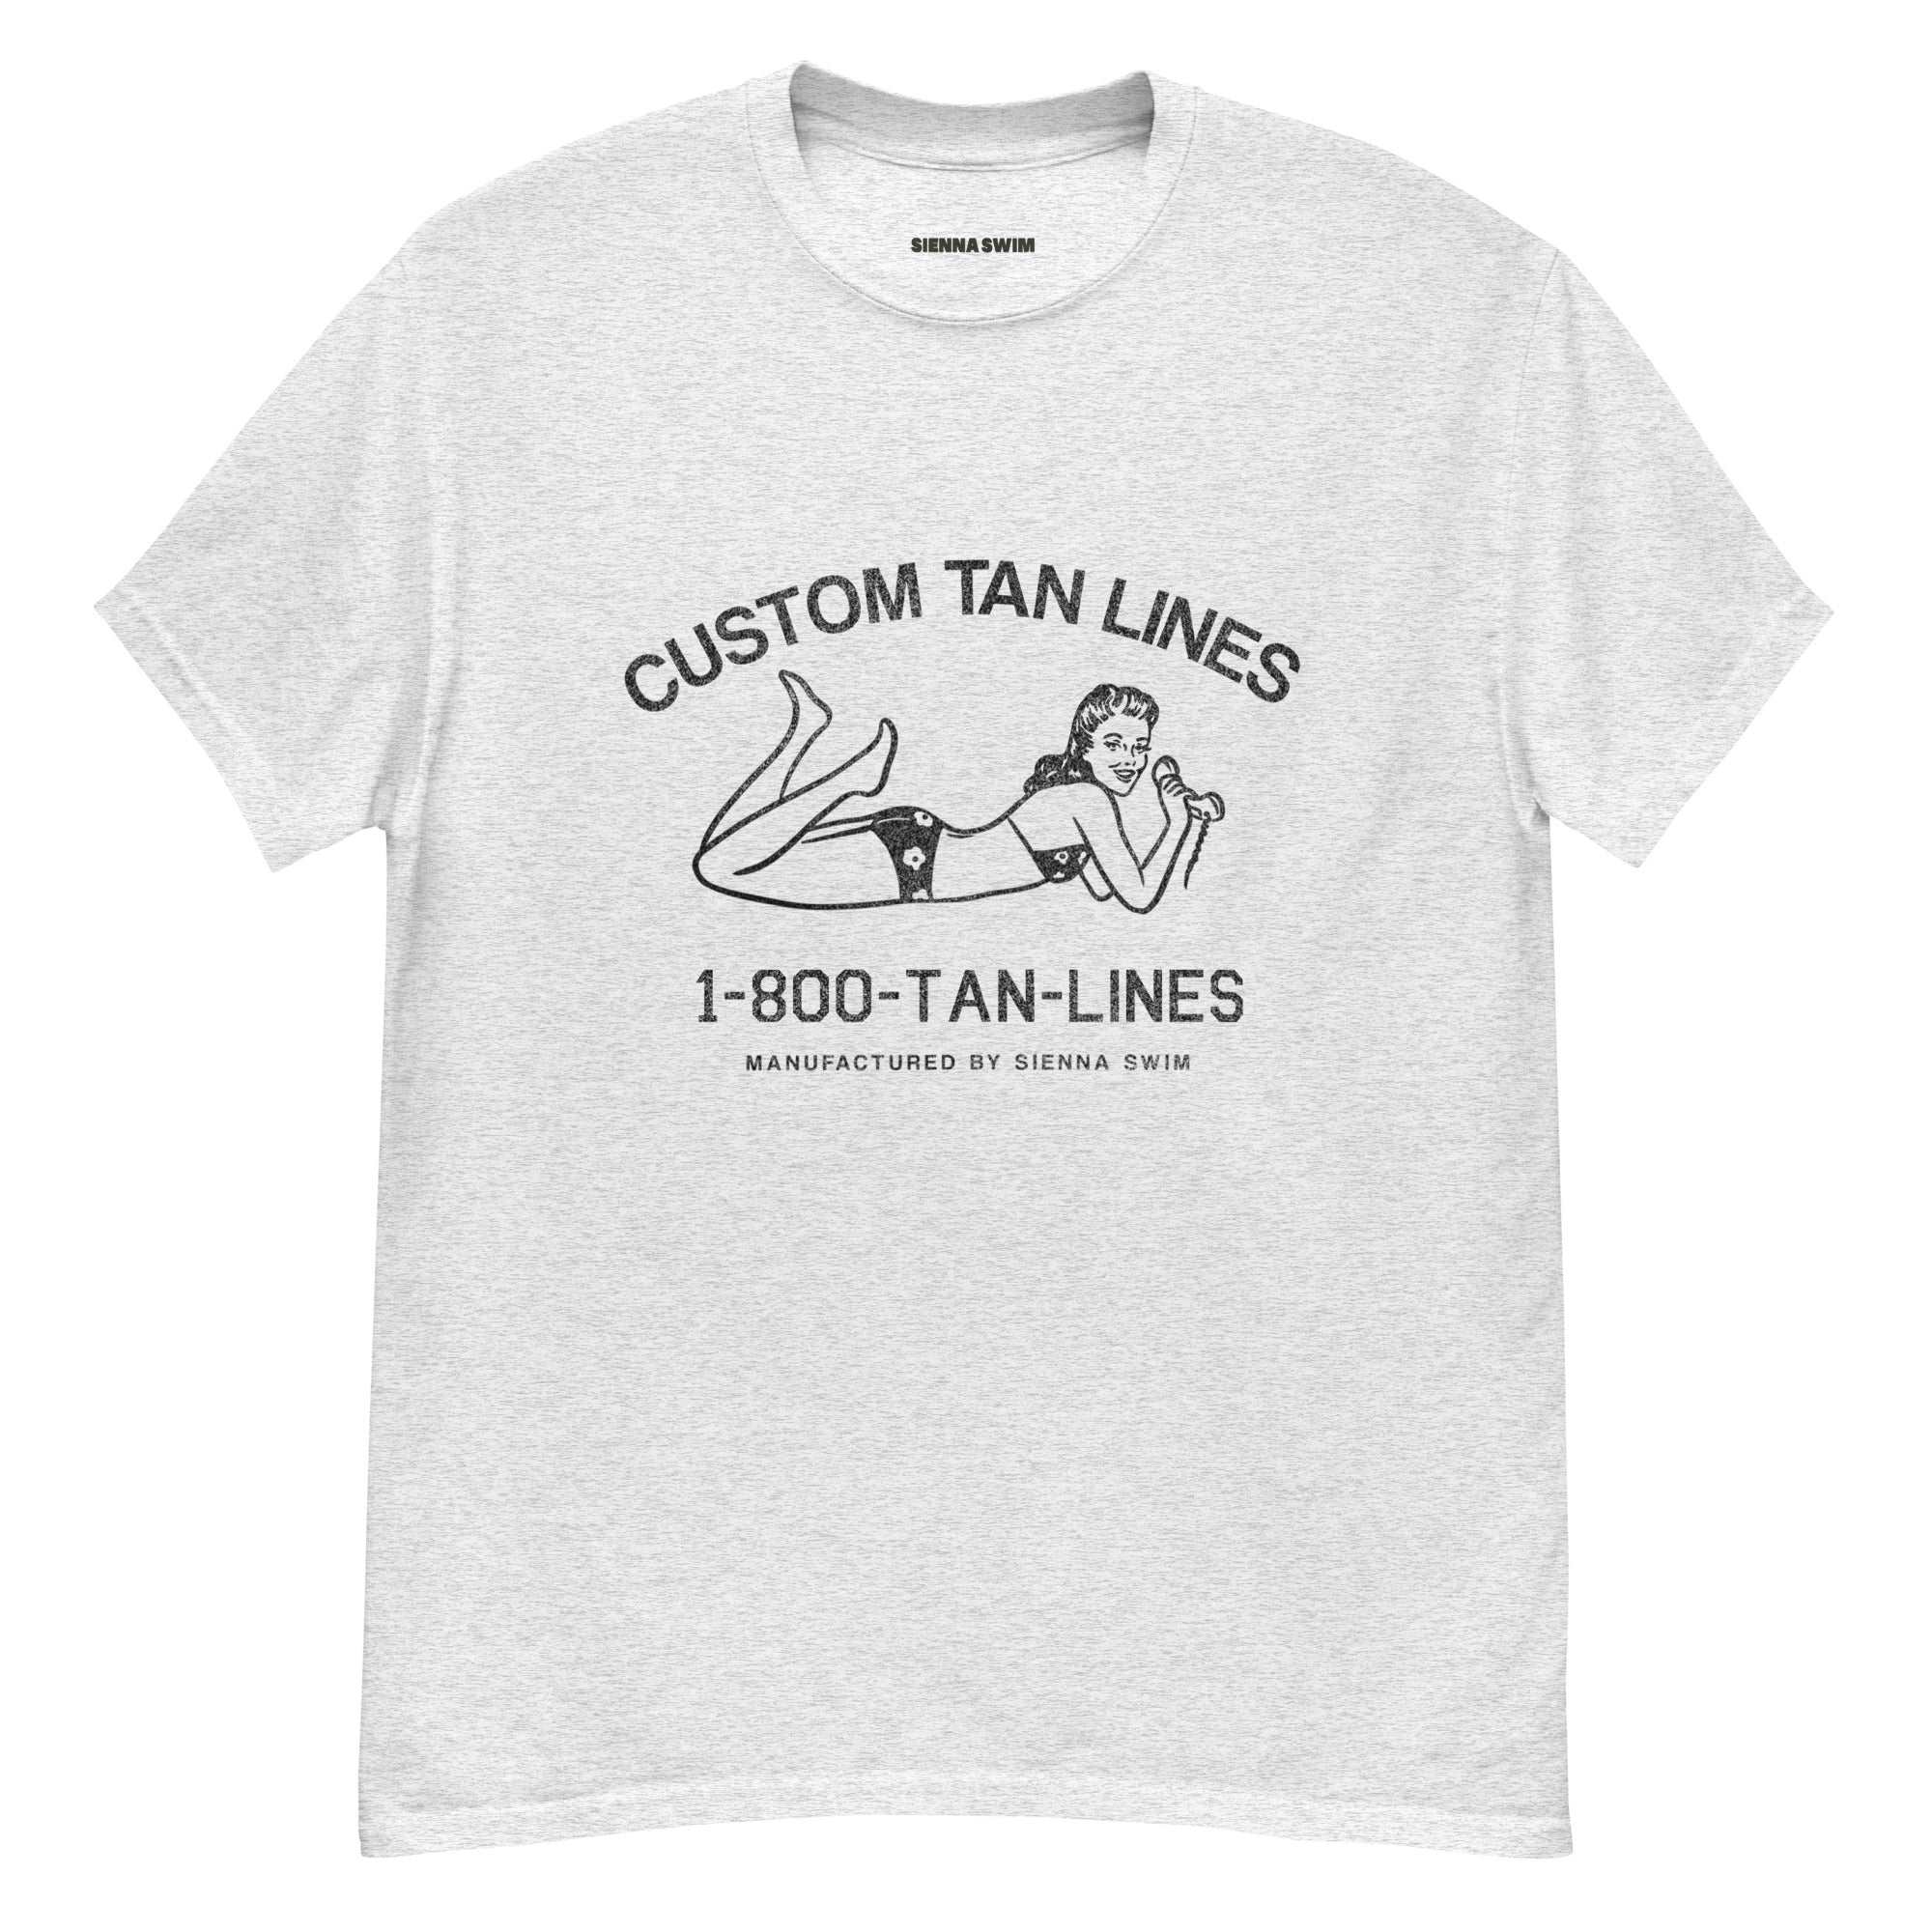 Outerwear: "Custom Tan Lines" oversized t-shirt